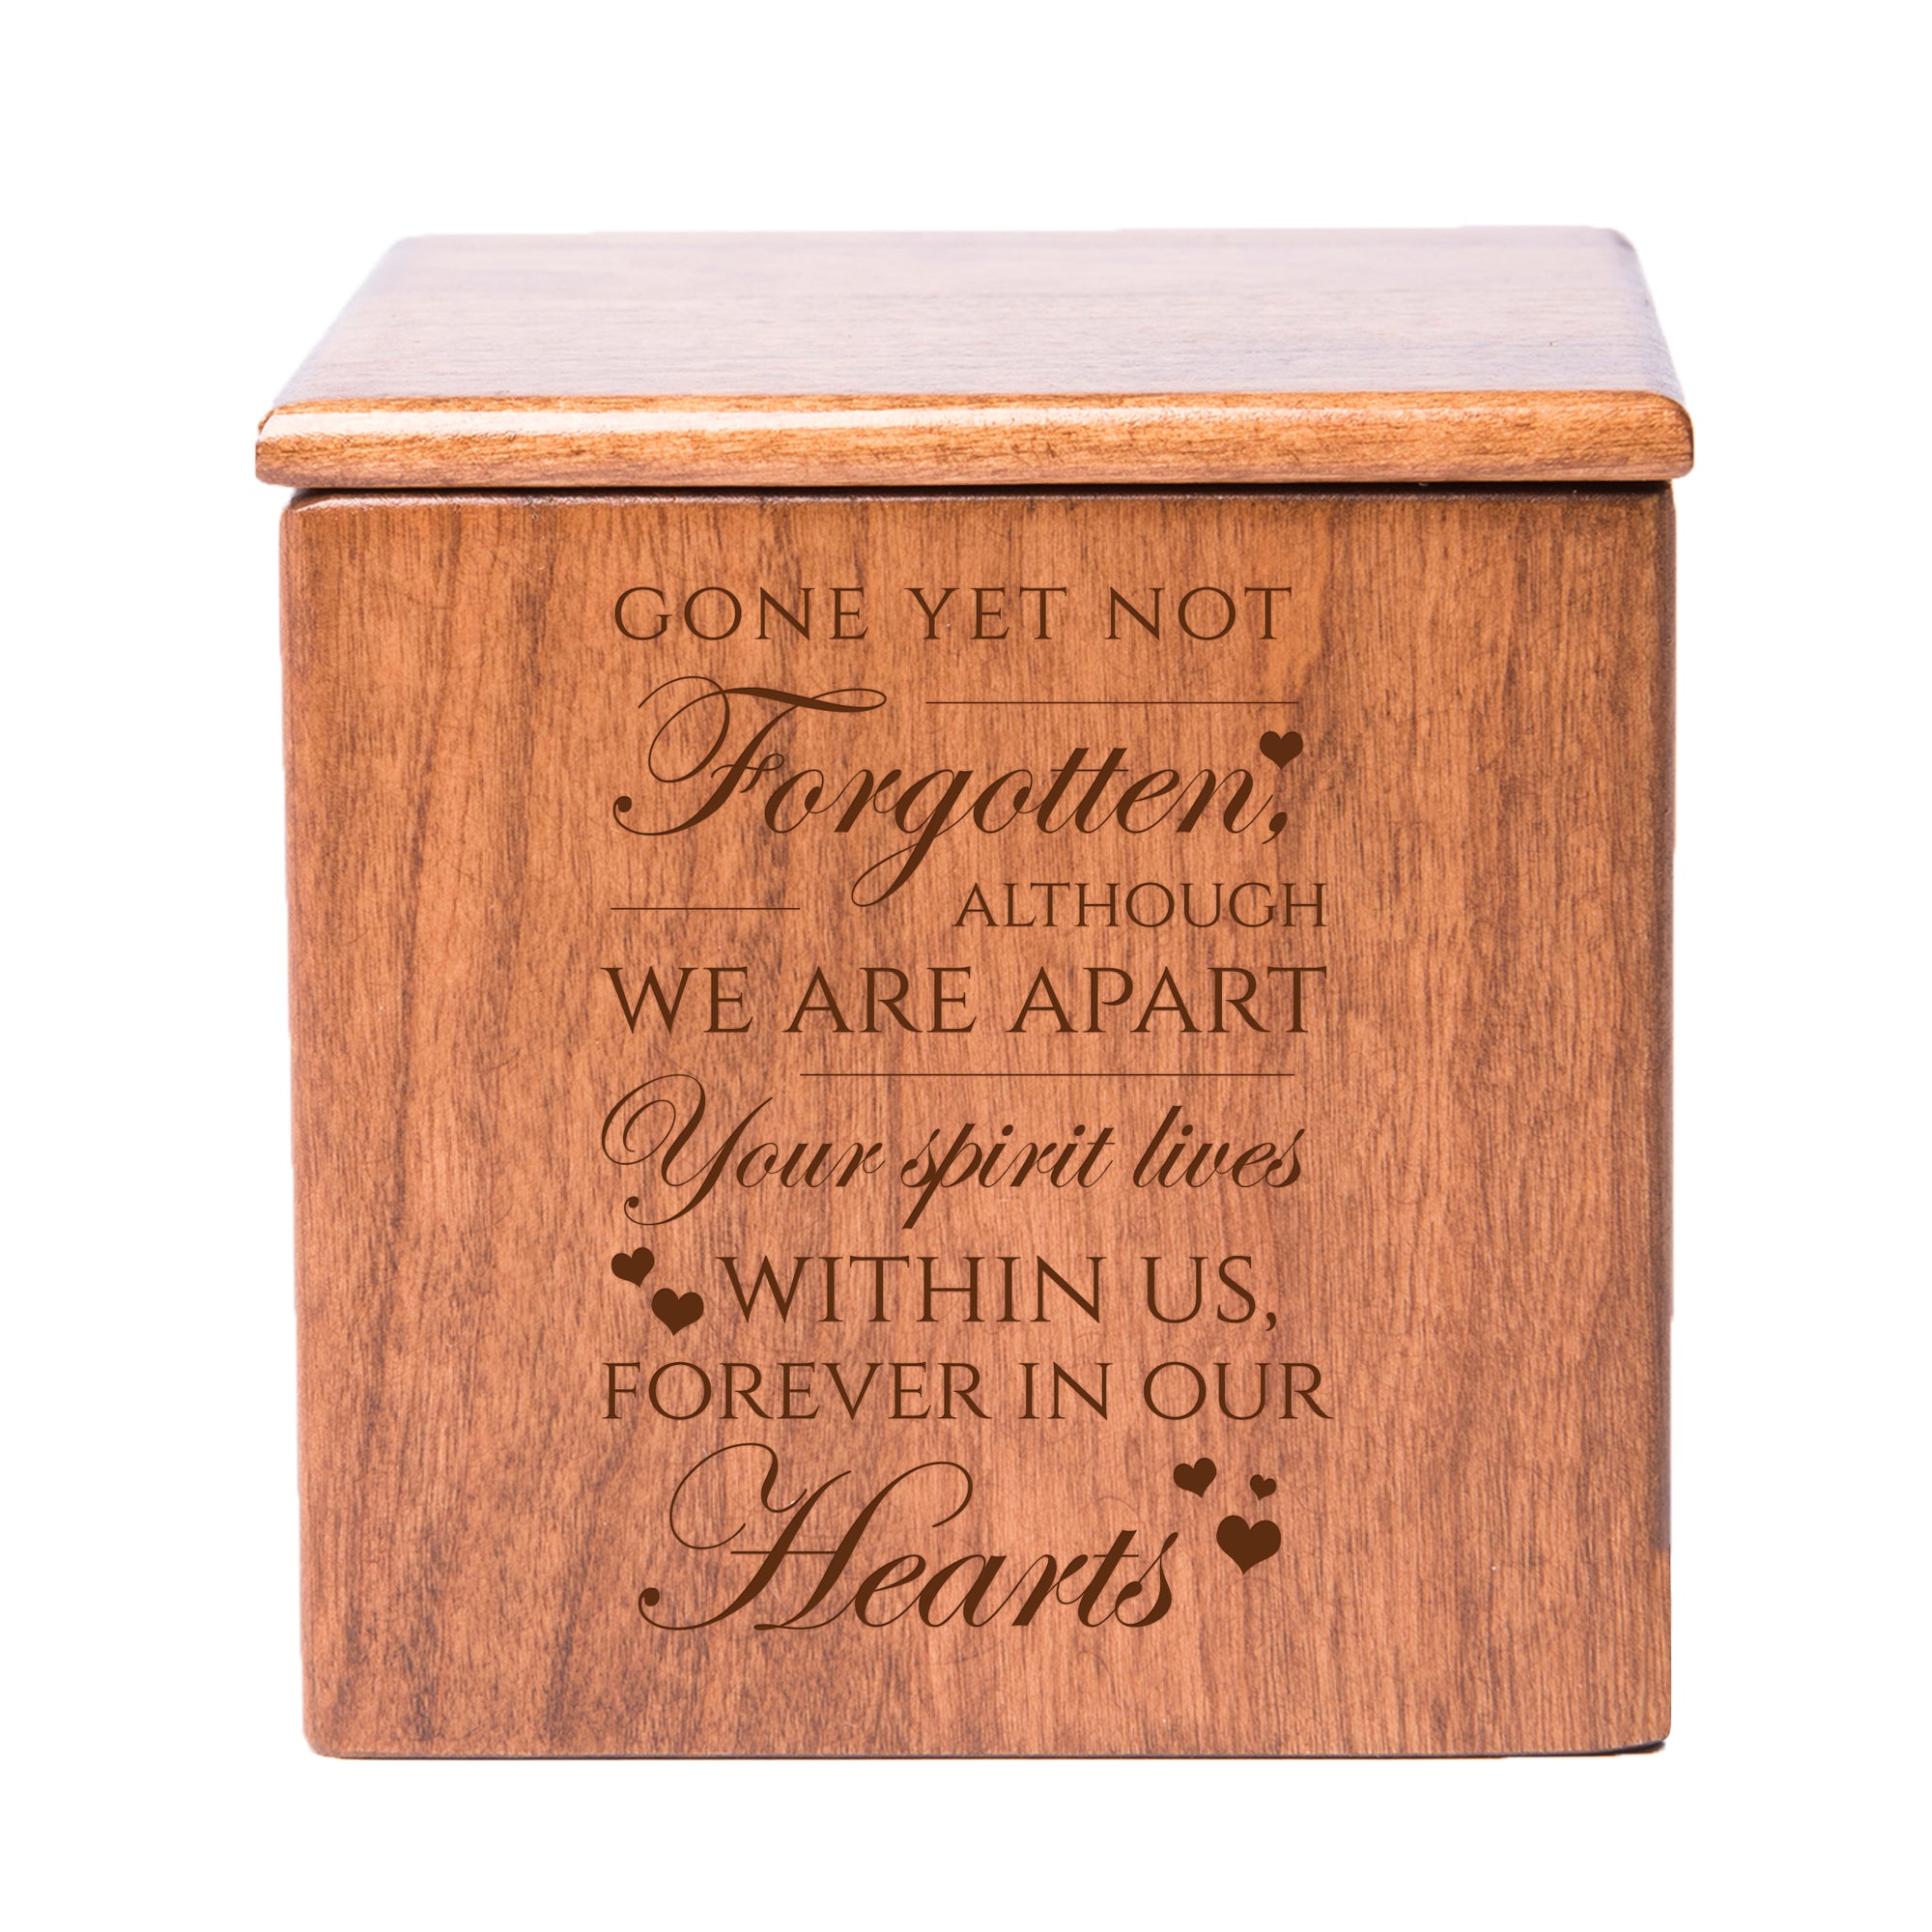 LifeSong Milestones Memorial Keepsake Box Bereavement Keepsake Box Loss of Loved One Sympathy Home Decor - 3.5” x 3.5” x 3.5”